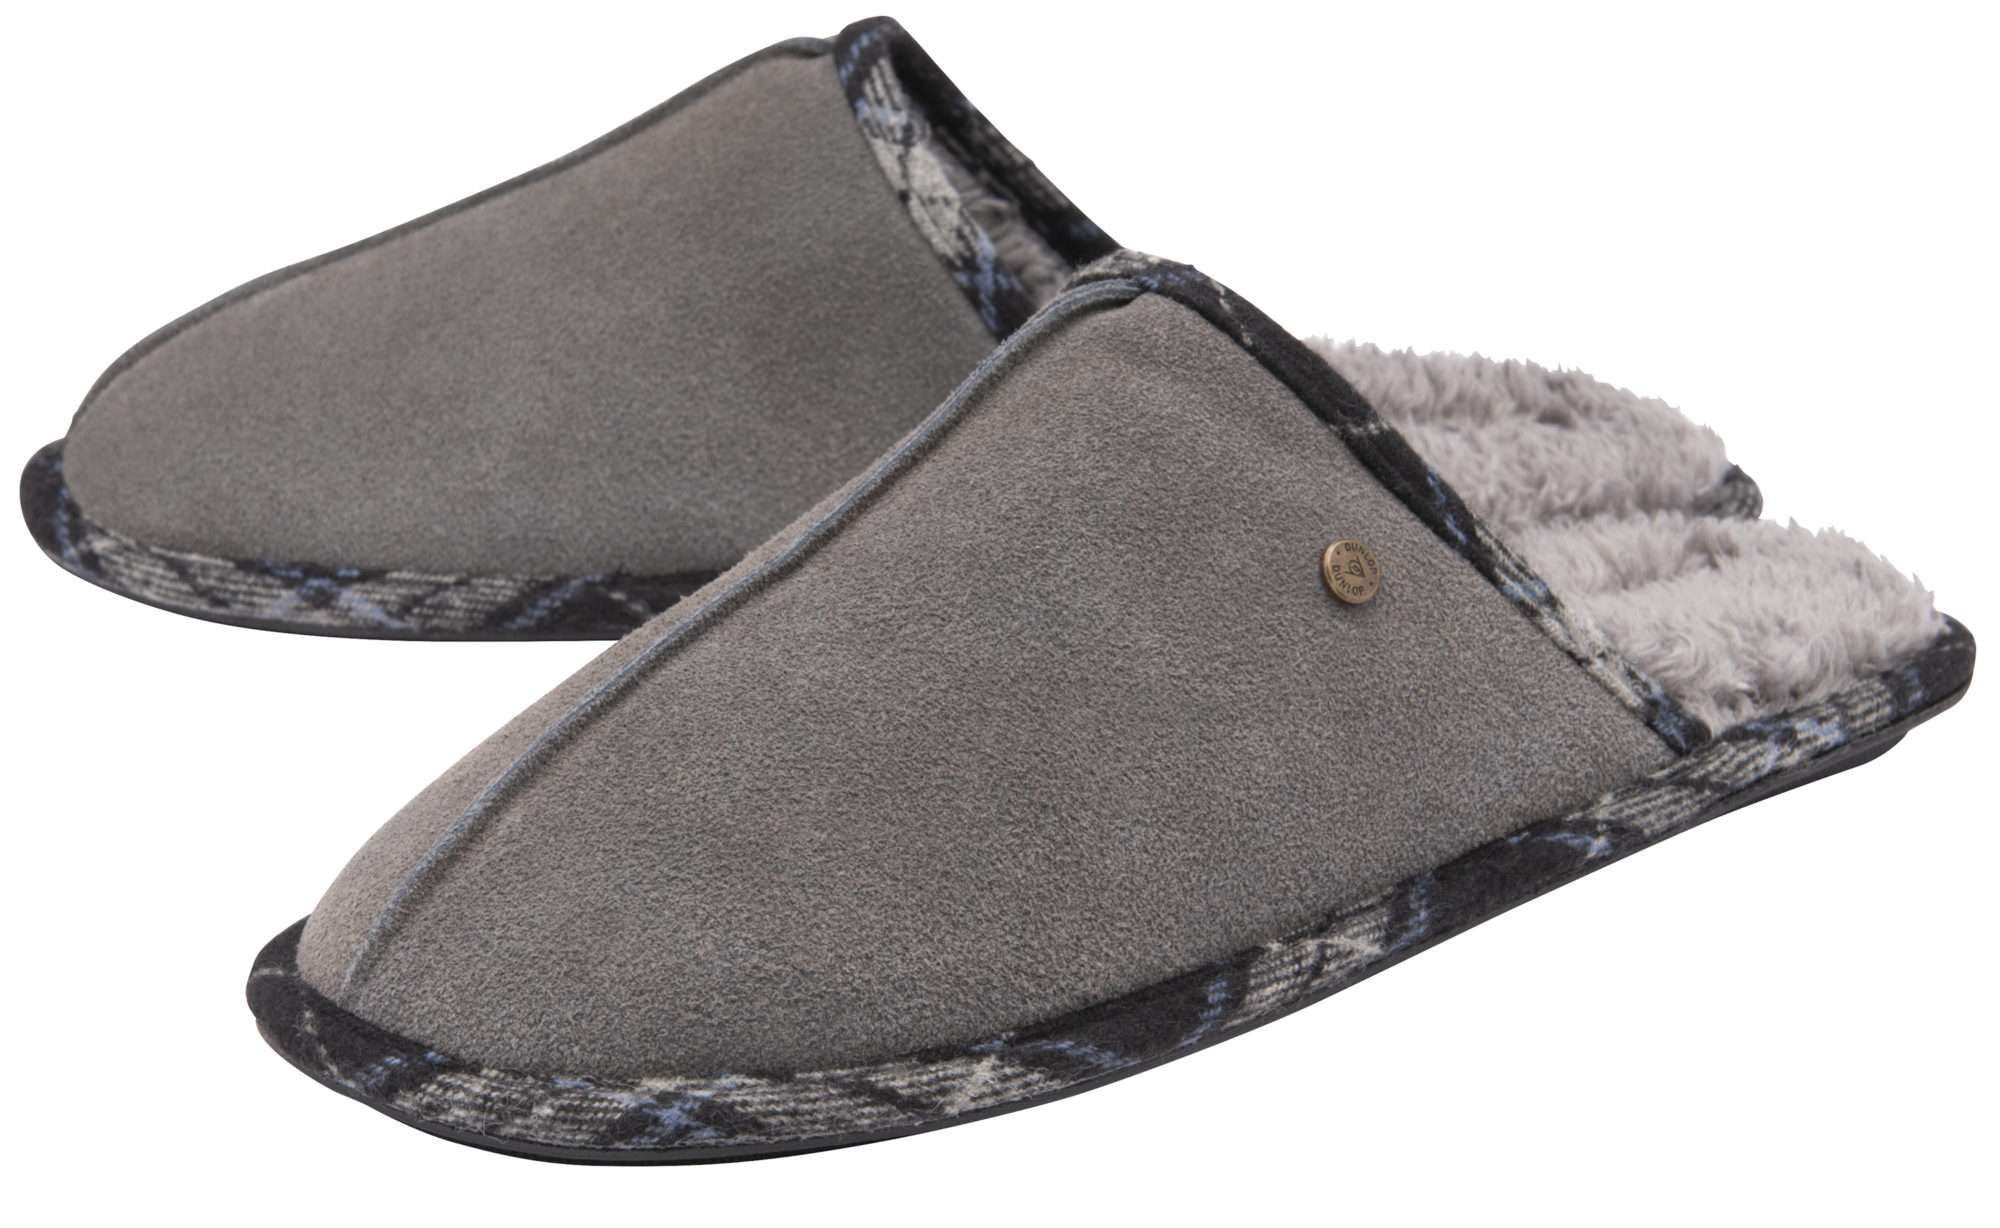 Sleepers DERMOT MS510 Suede Leather Lightweight Mule Slippers 